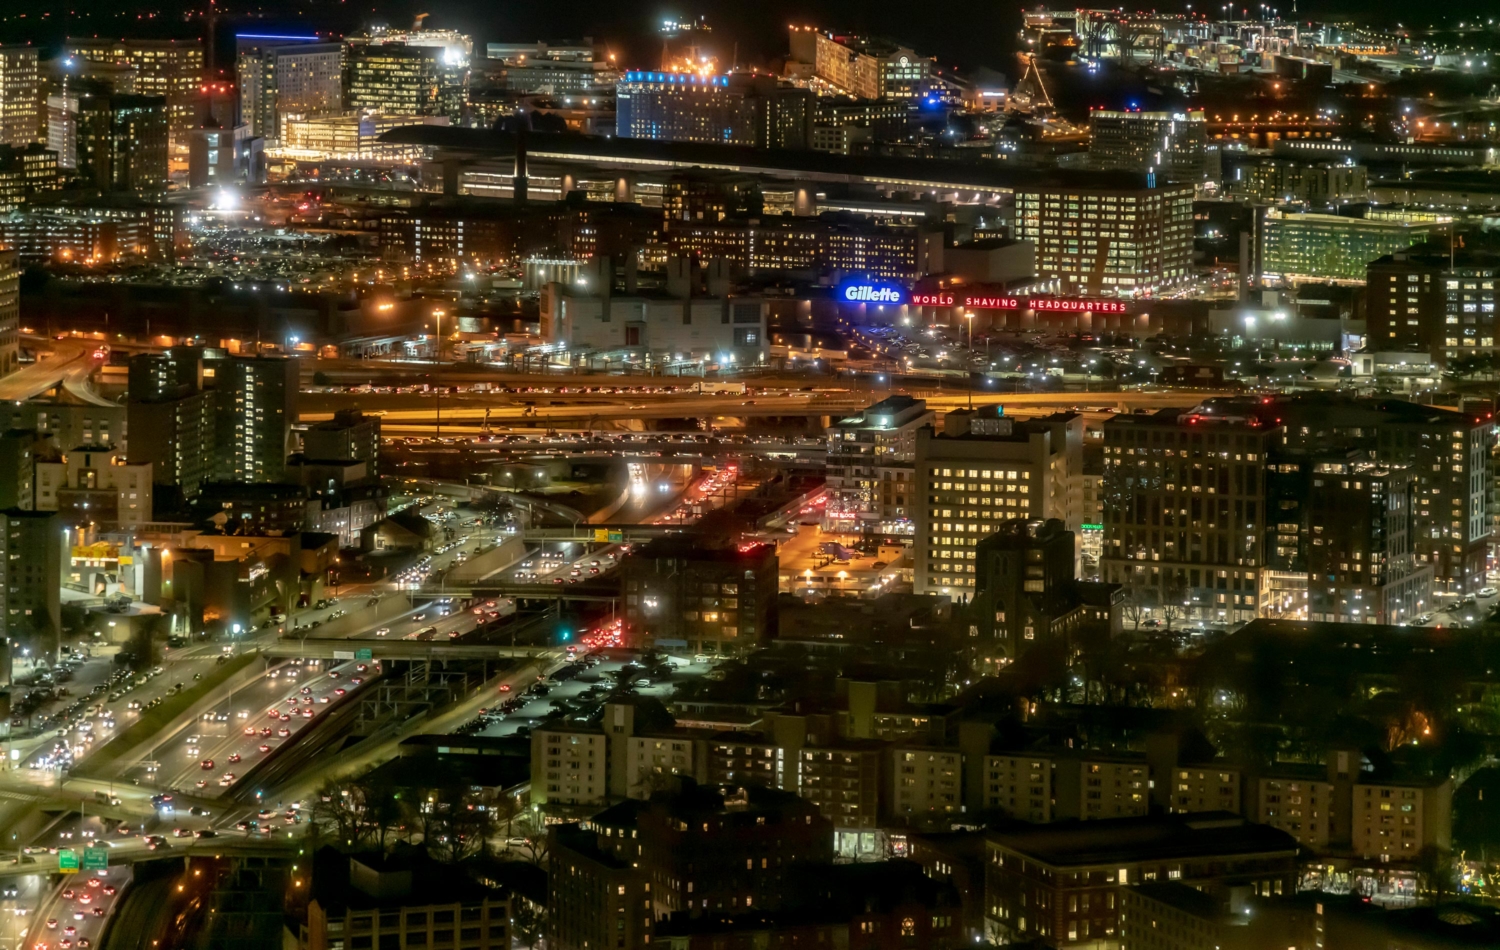 Boston night skyline - shot by WaltonCreative